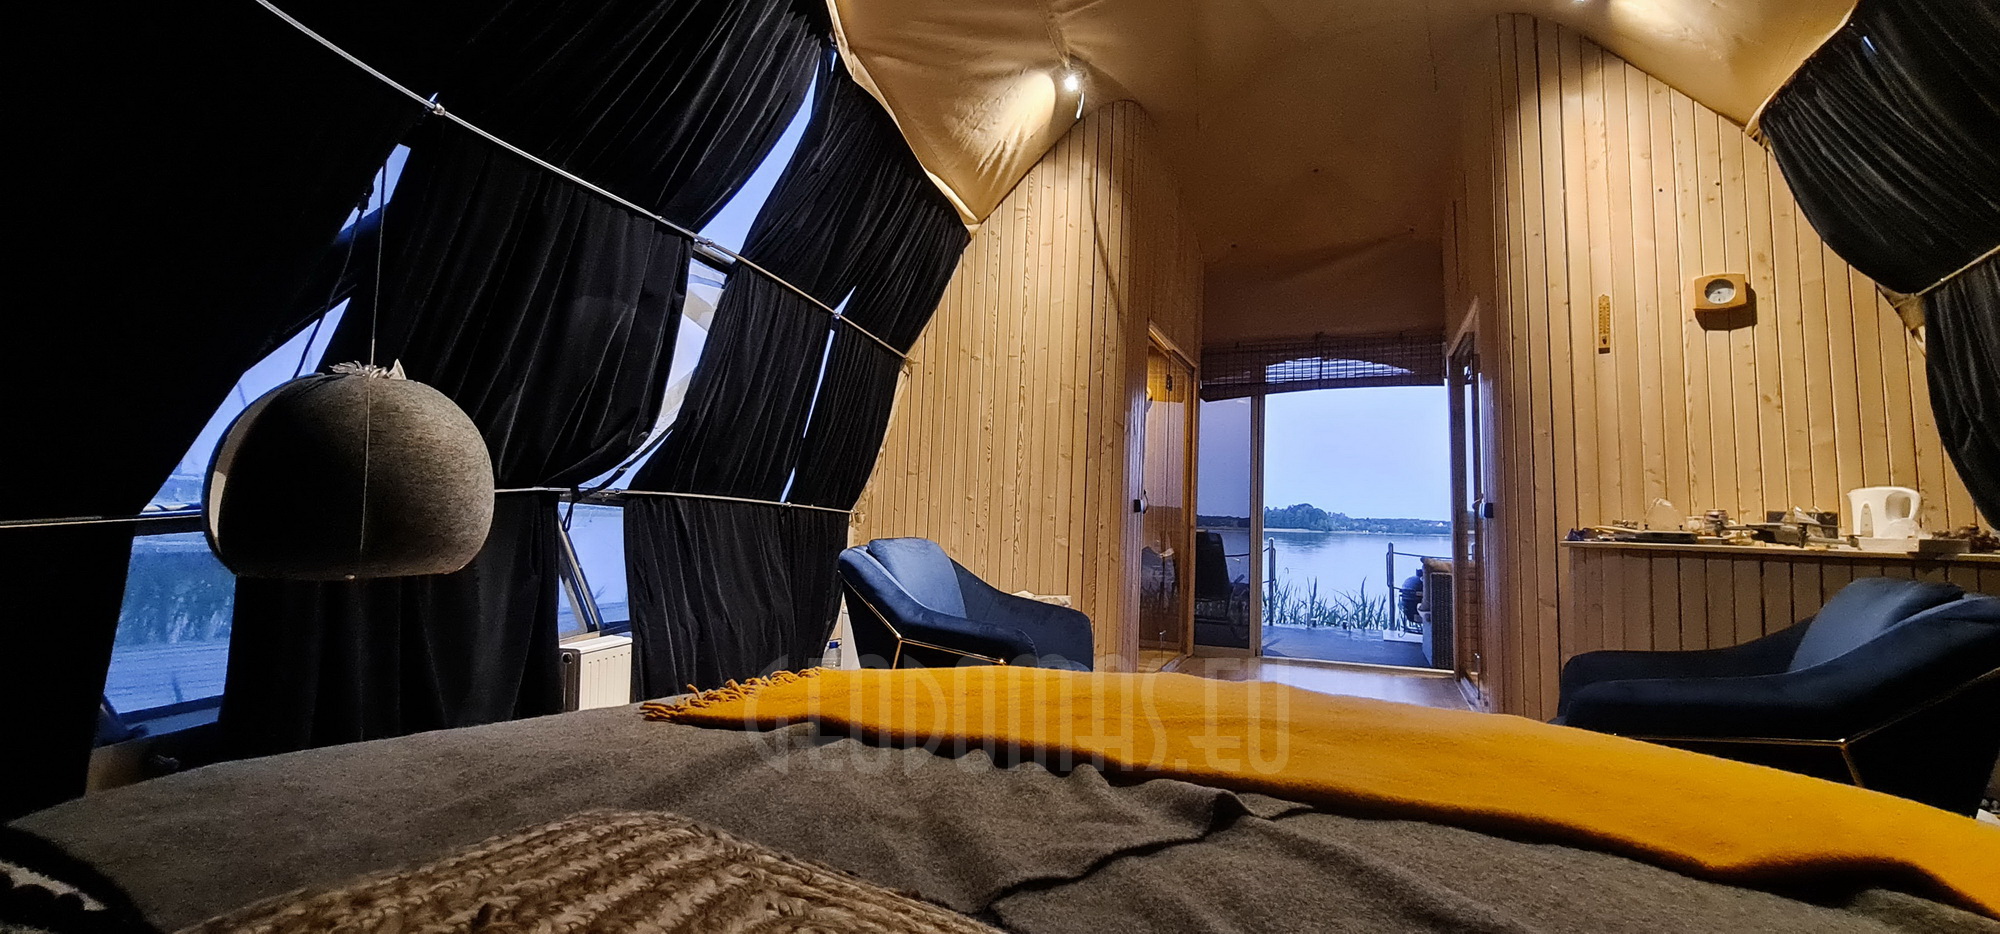 27m² Luxury Glamping Yacht | Floating Dome Ø7m, Trakai LT